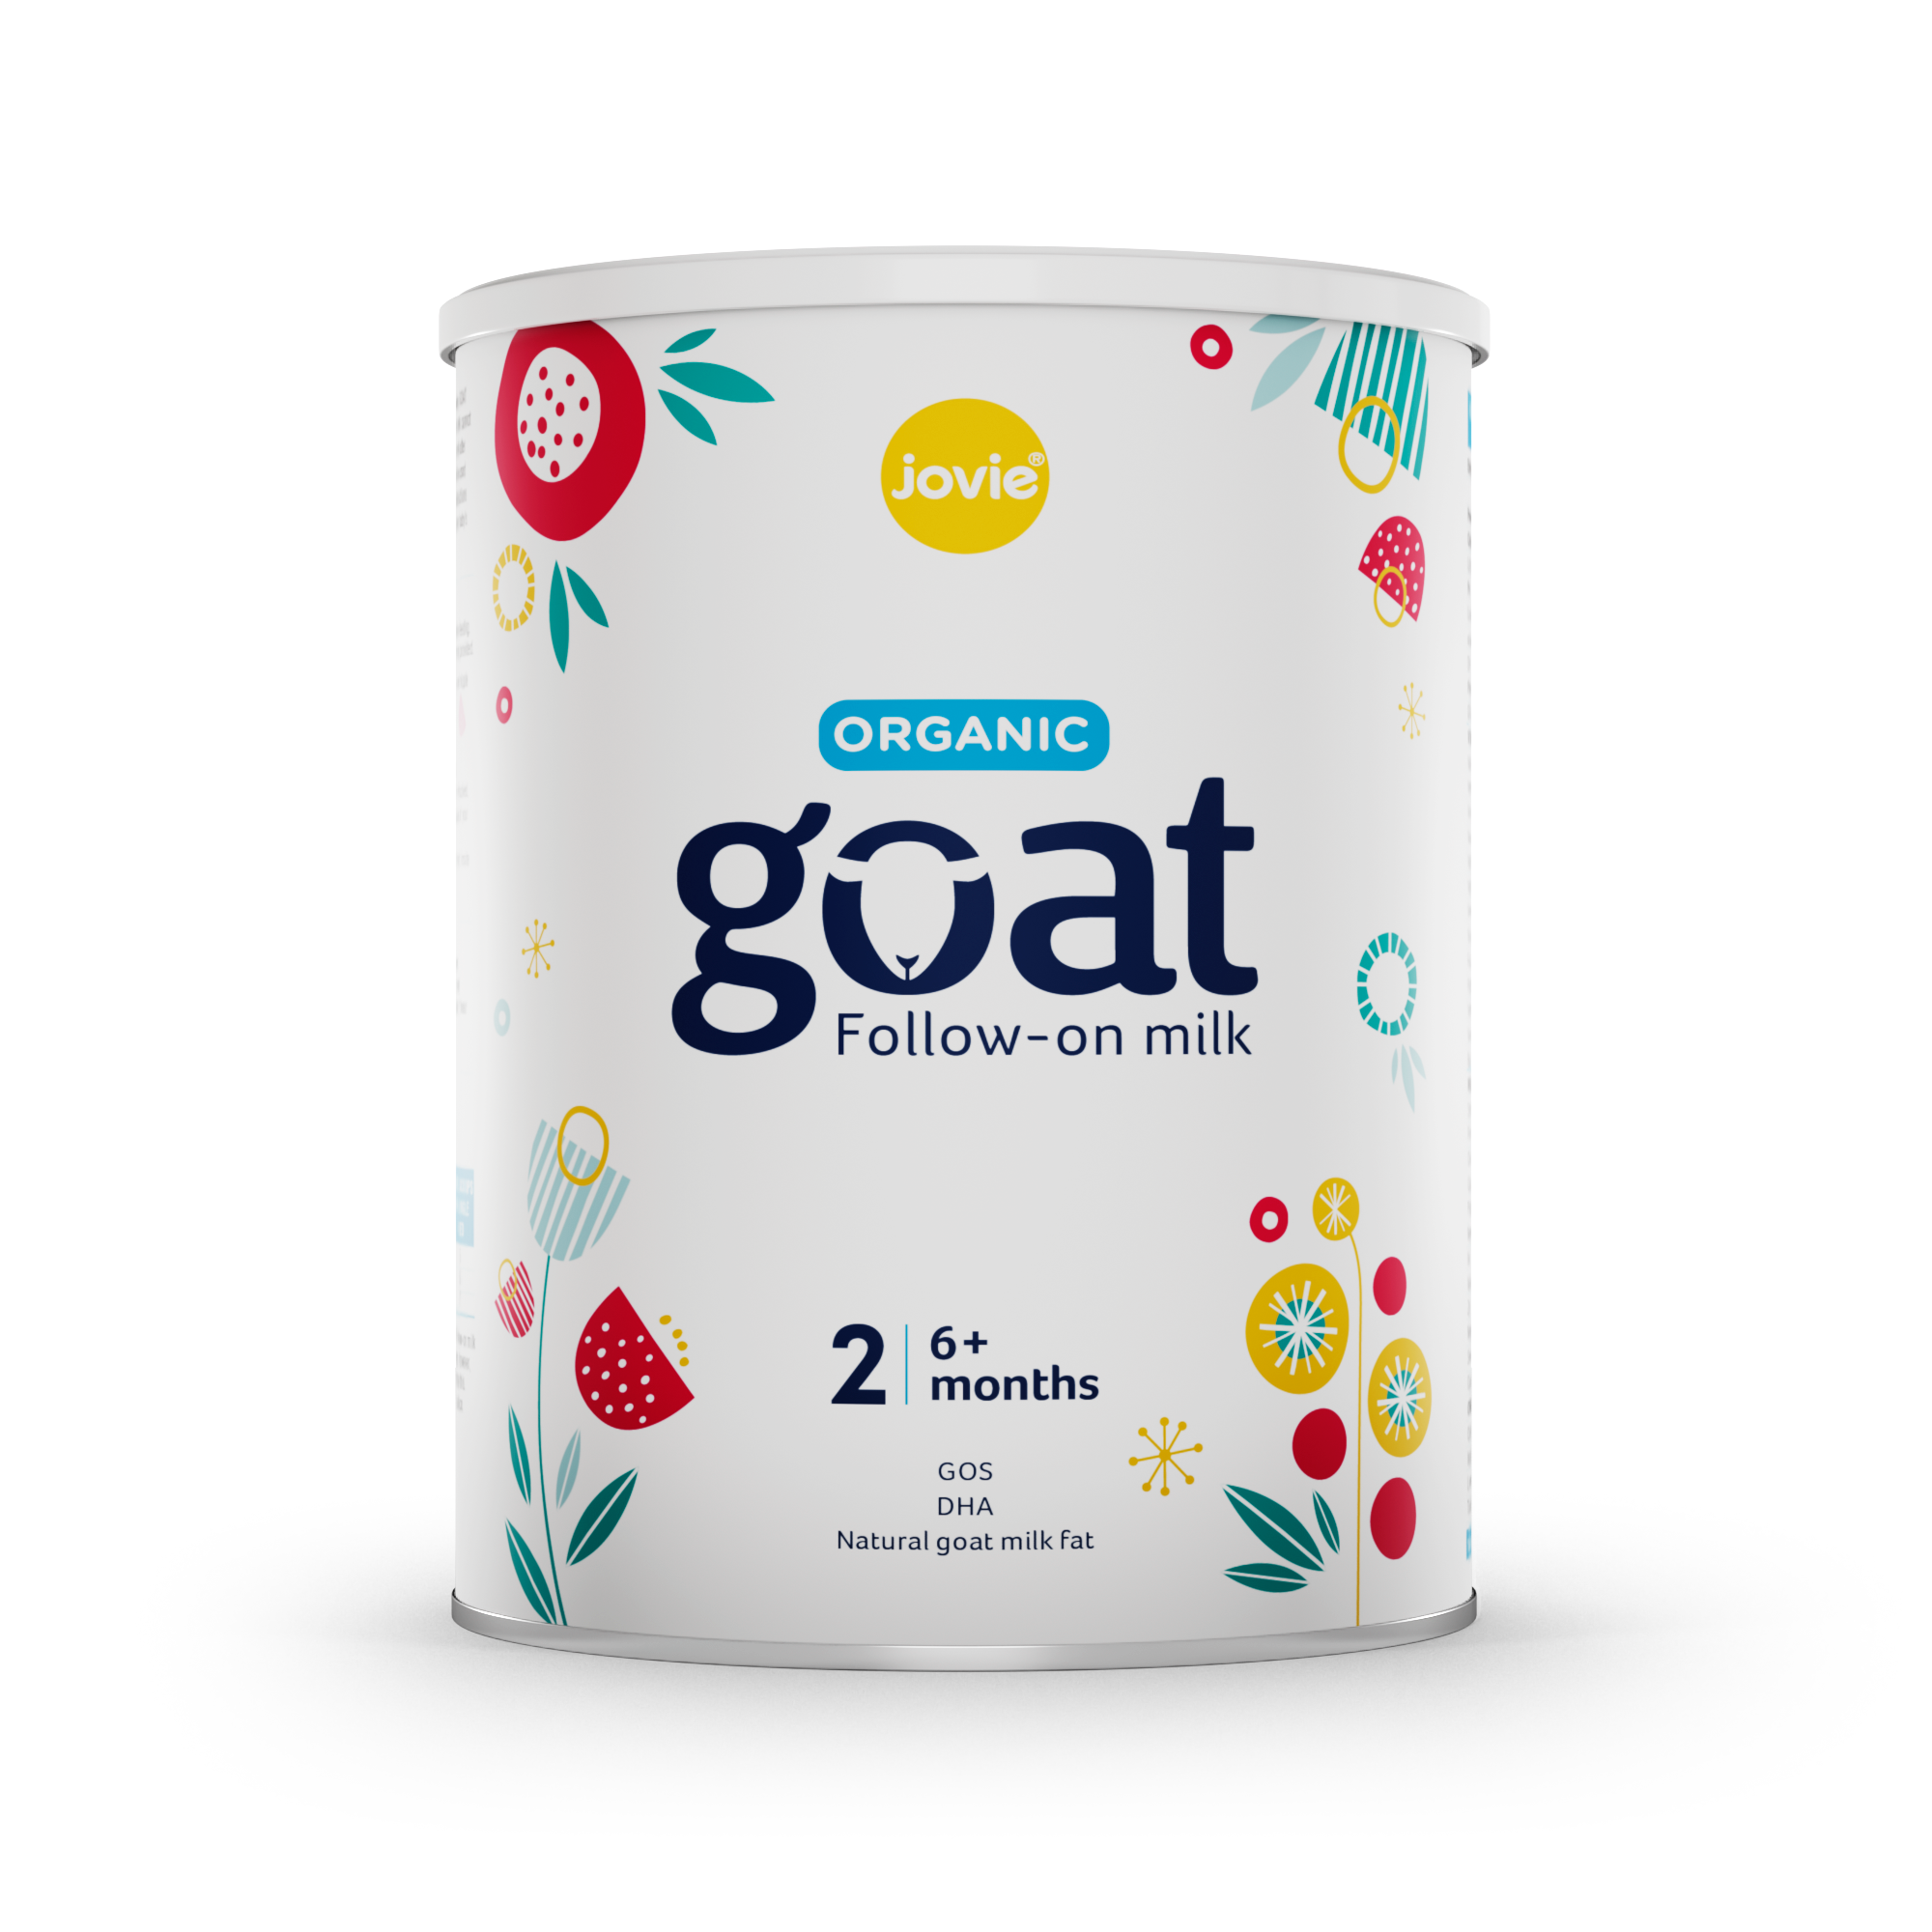 Jovie Goat Organic Follow-on Milk - front